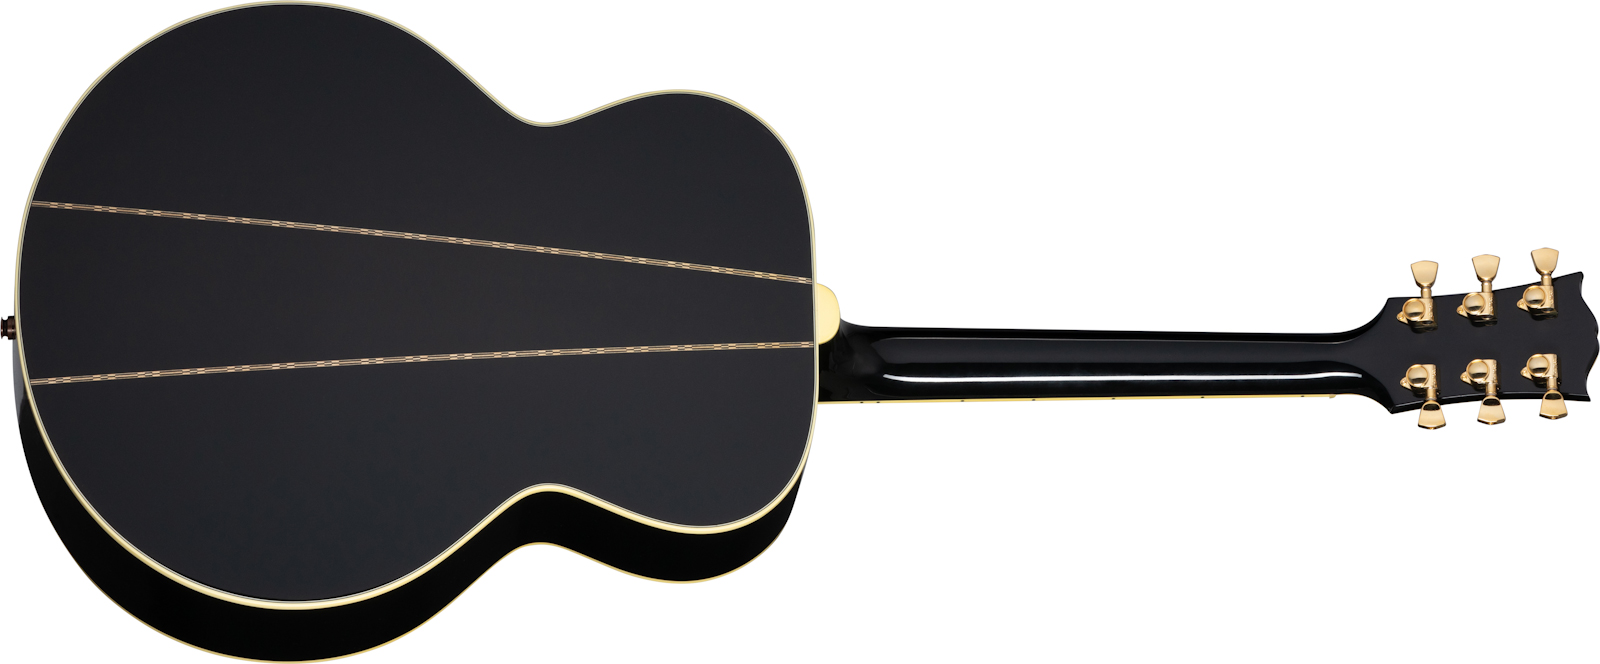 Gibson Custom Shop Elvis Presley Sj-200 Signature Jumbo Epicea Palissandre Rw - Ebony - Acoustic guitar & electro - Variation 1